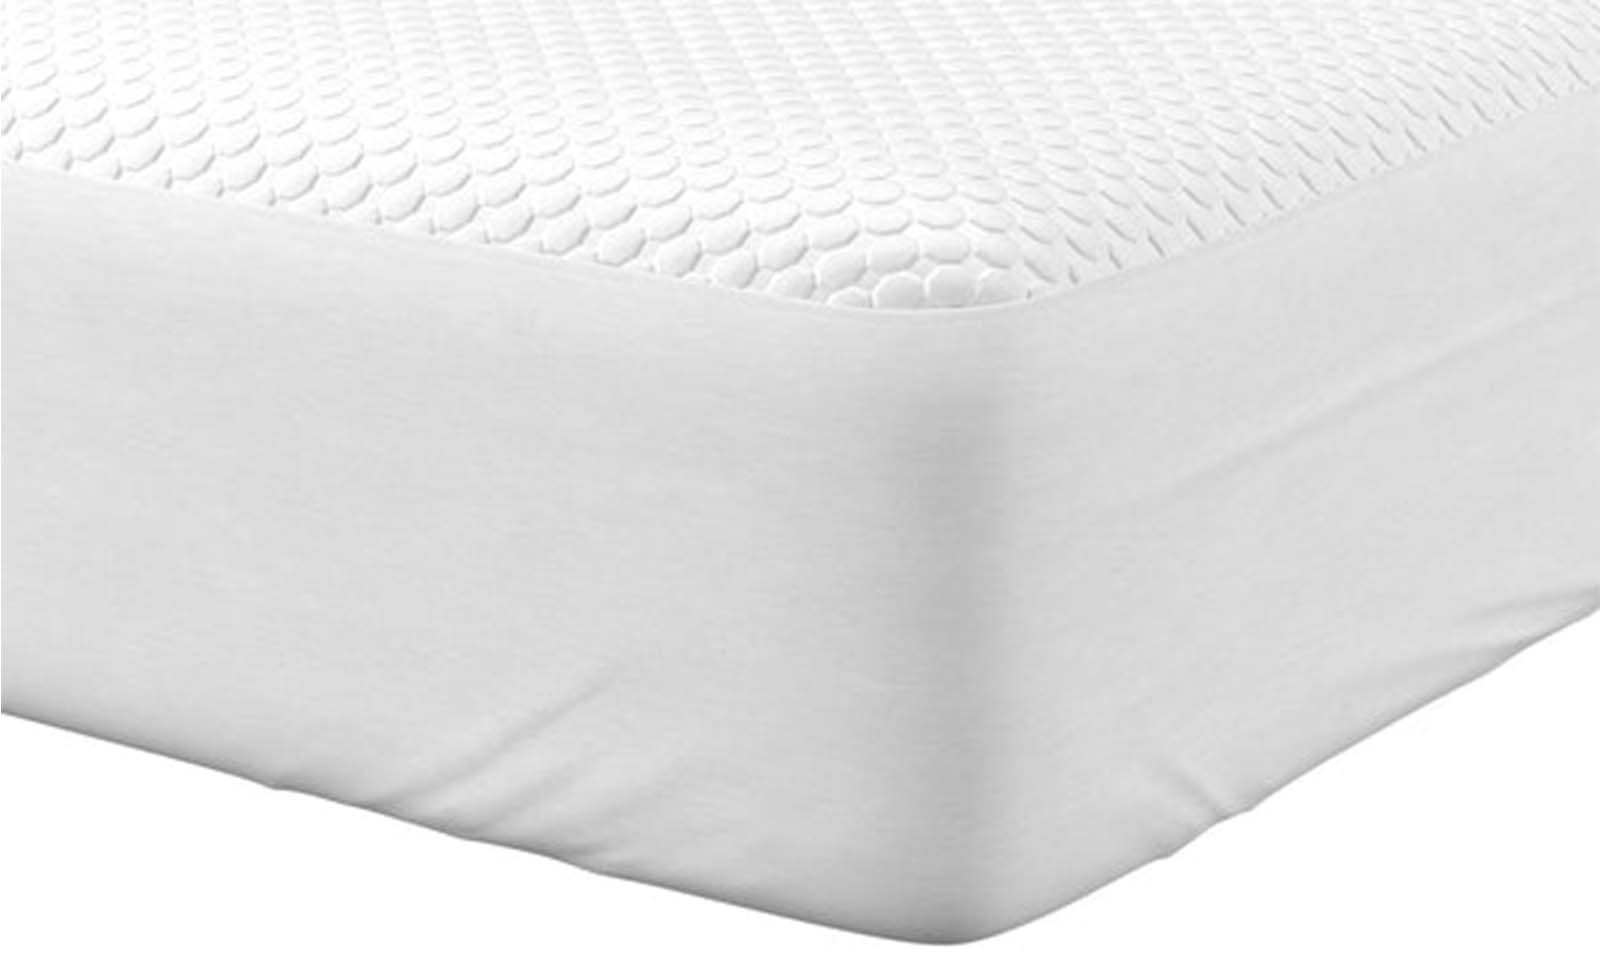 mattress protector price check